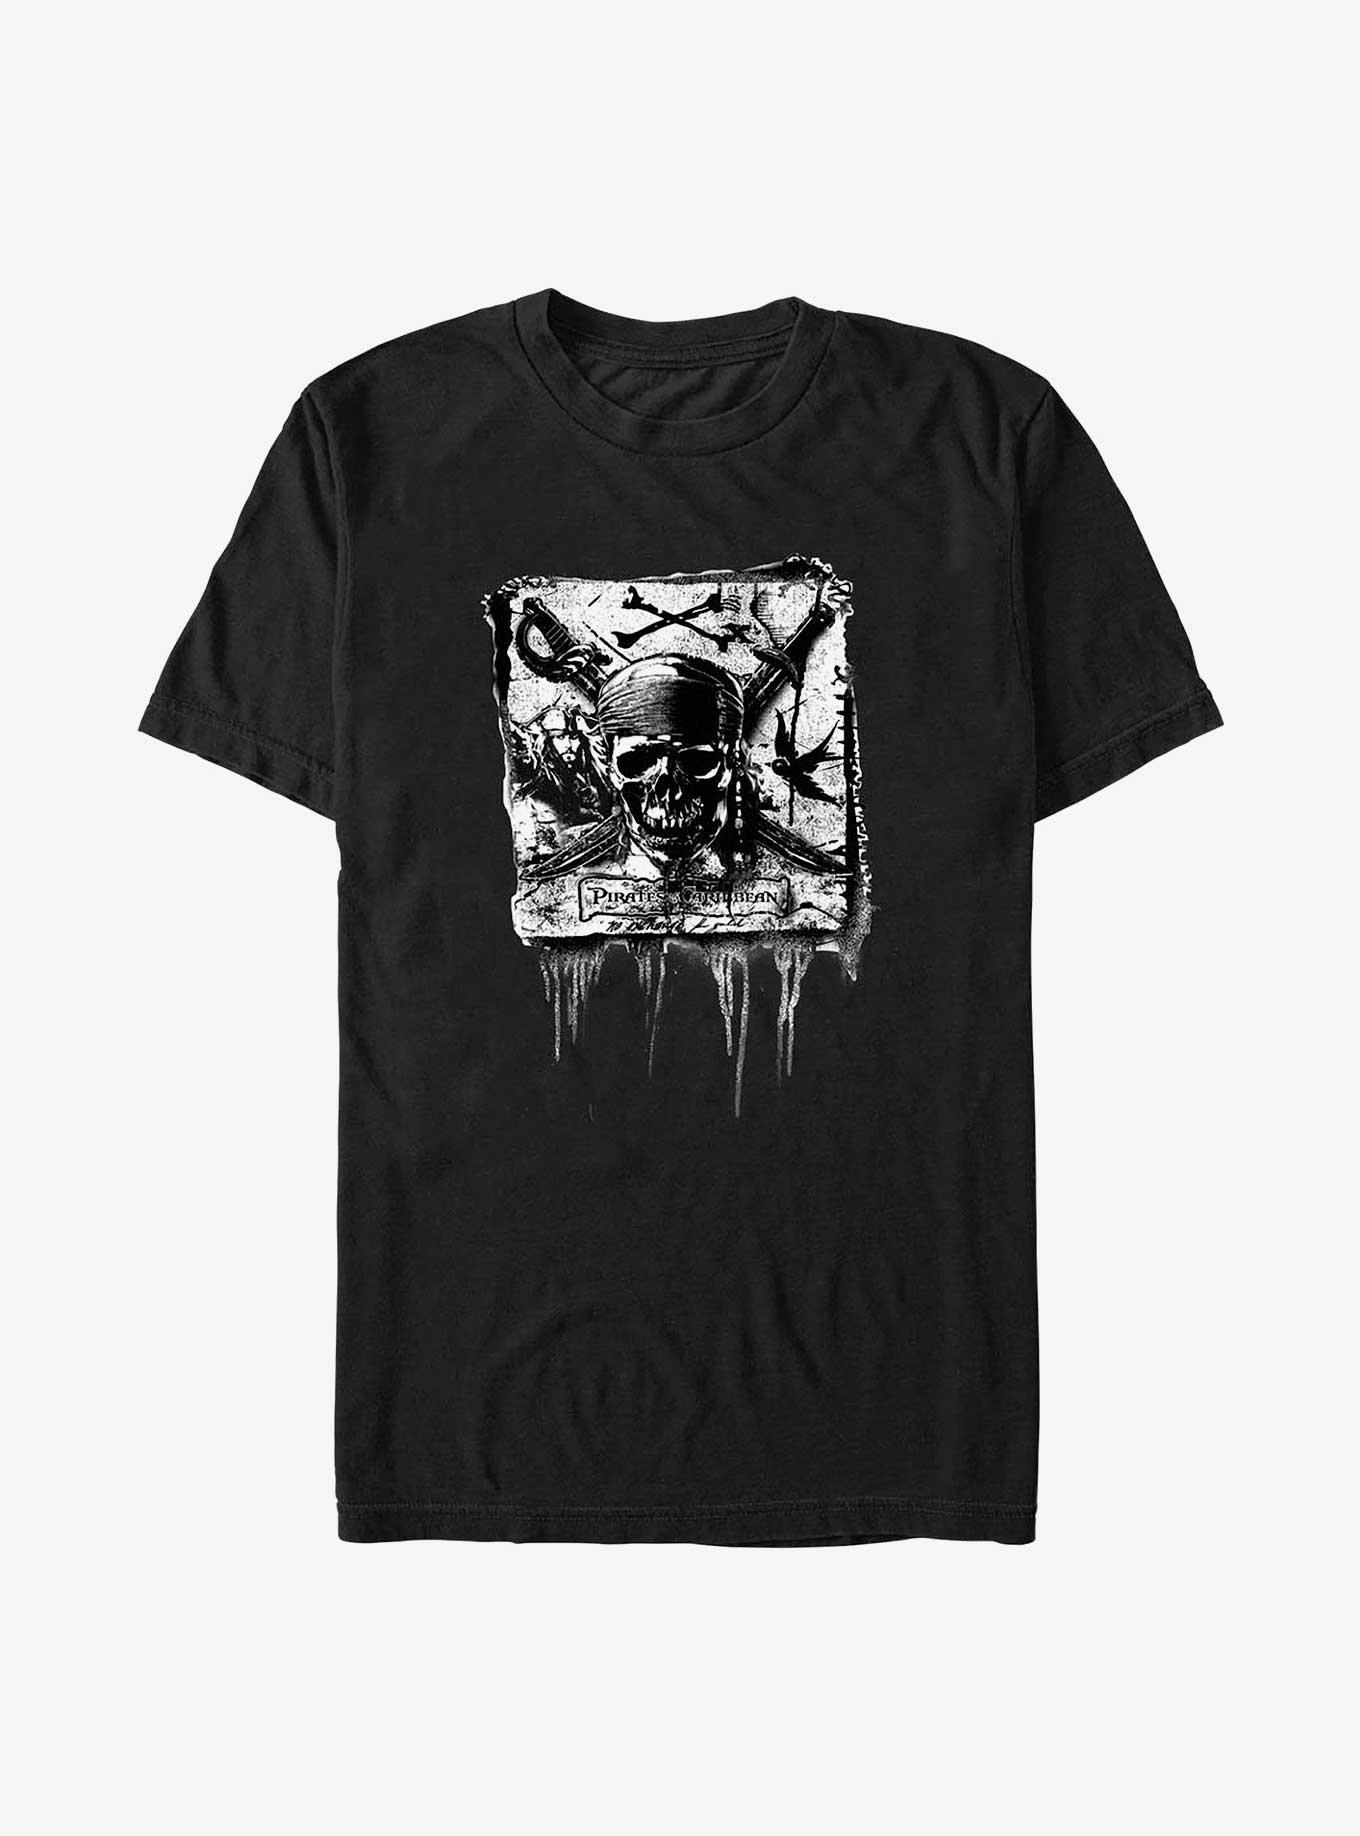 Pirates of the Caribbean T-Shirt | Savvy | Unisex